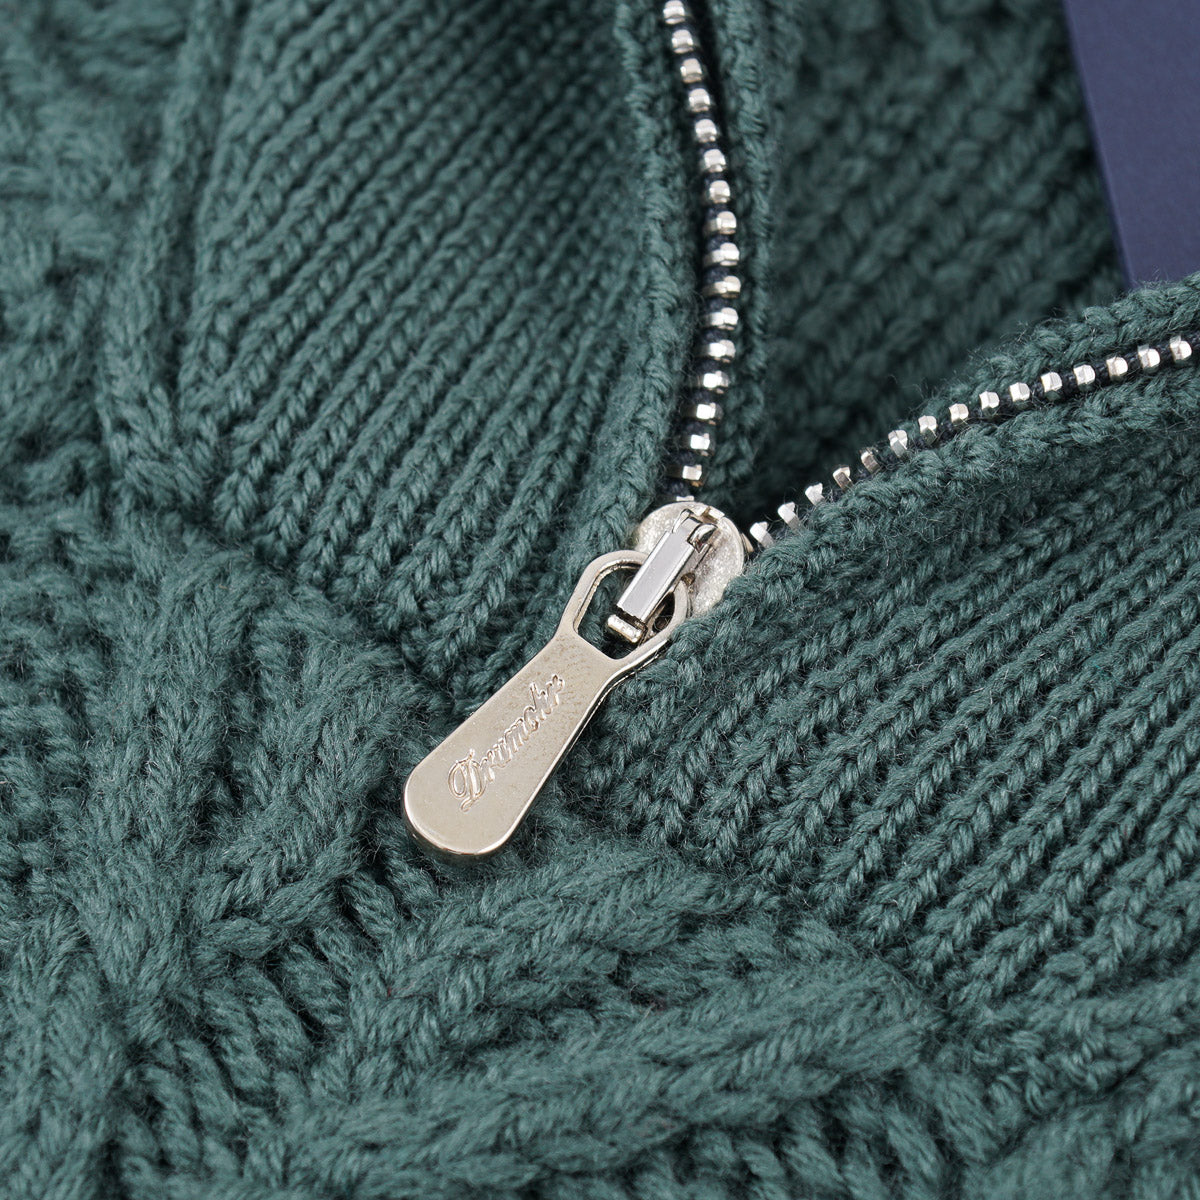 Drumohr Half-Zip Merino Wool Sweater - Top Shelf Apparel